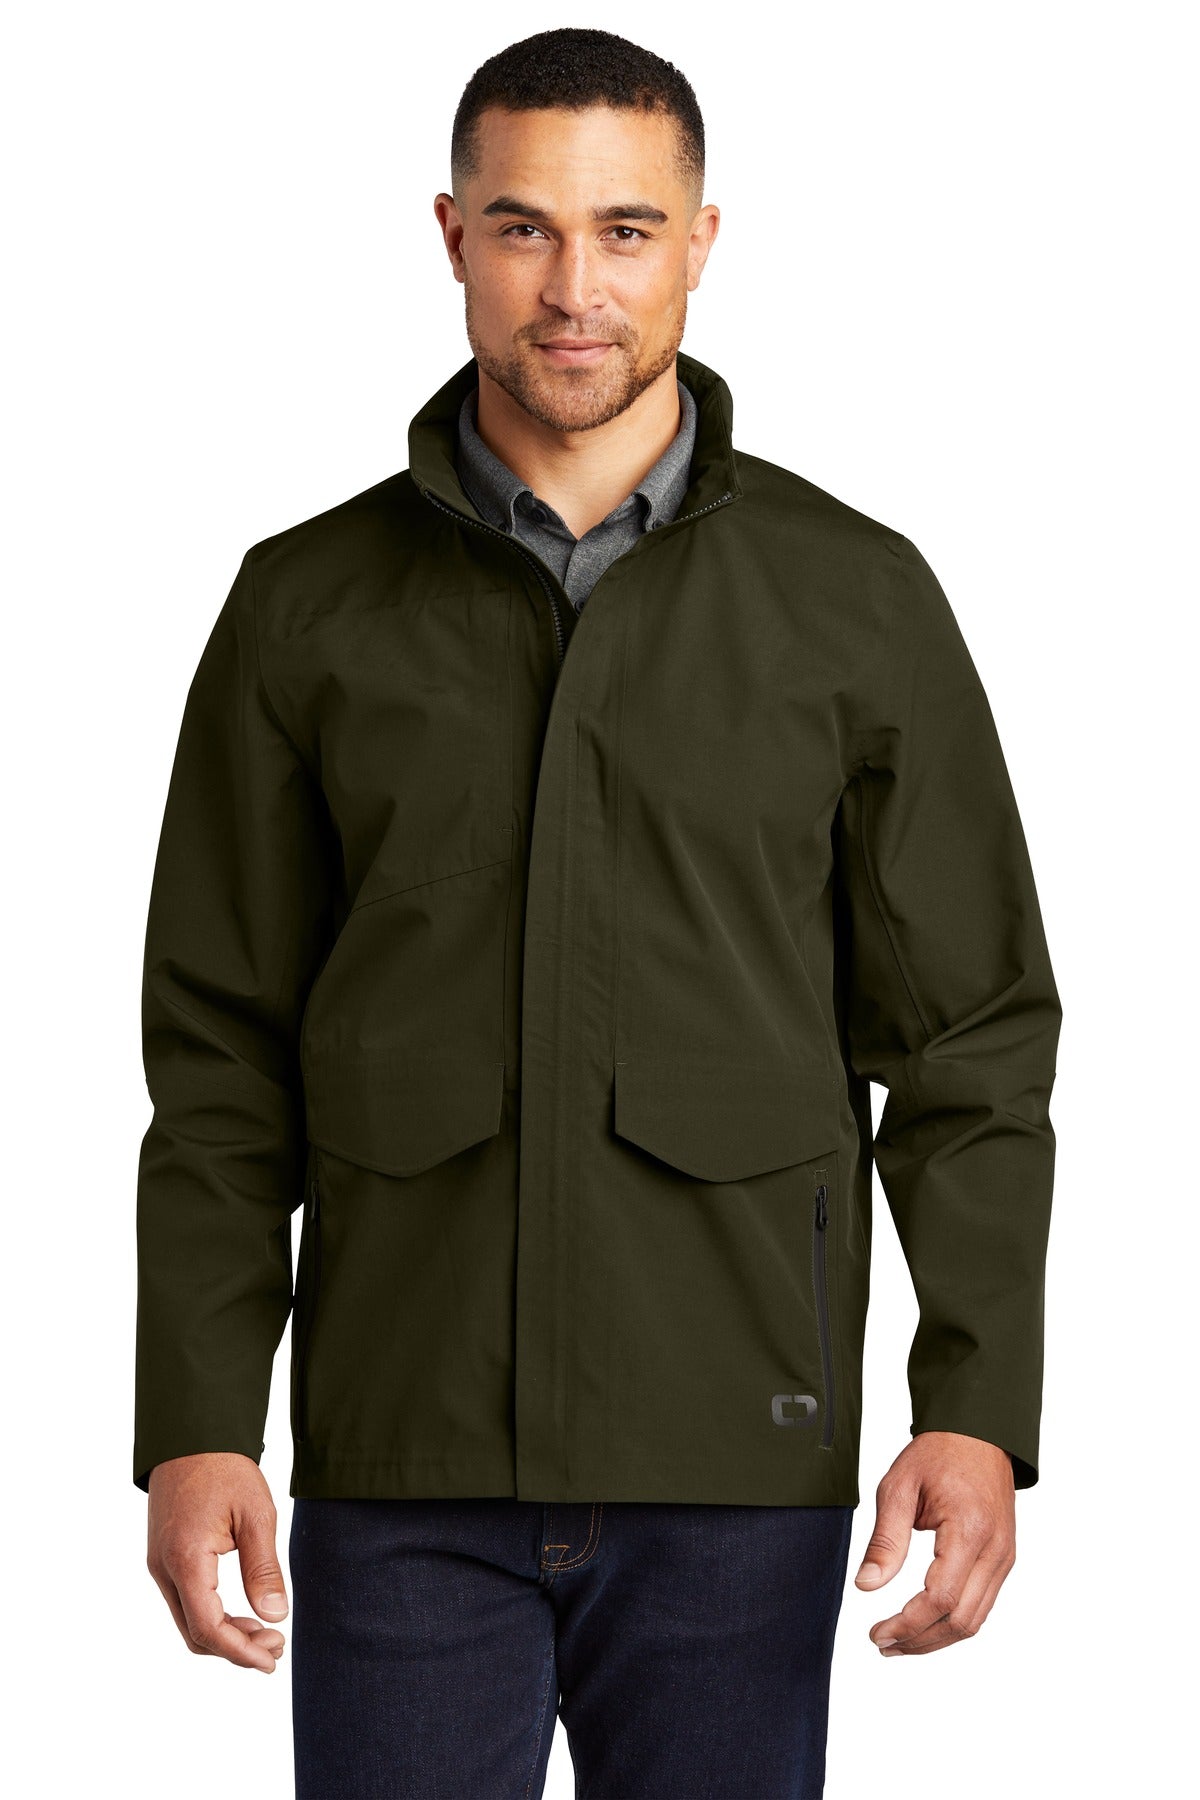 OGIO ® Utilitarian Jacket. OG752 - DFW Impression